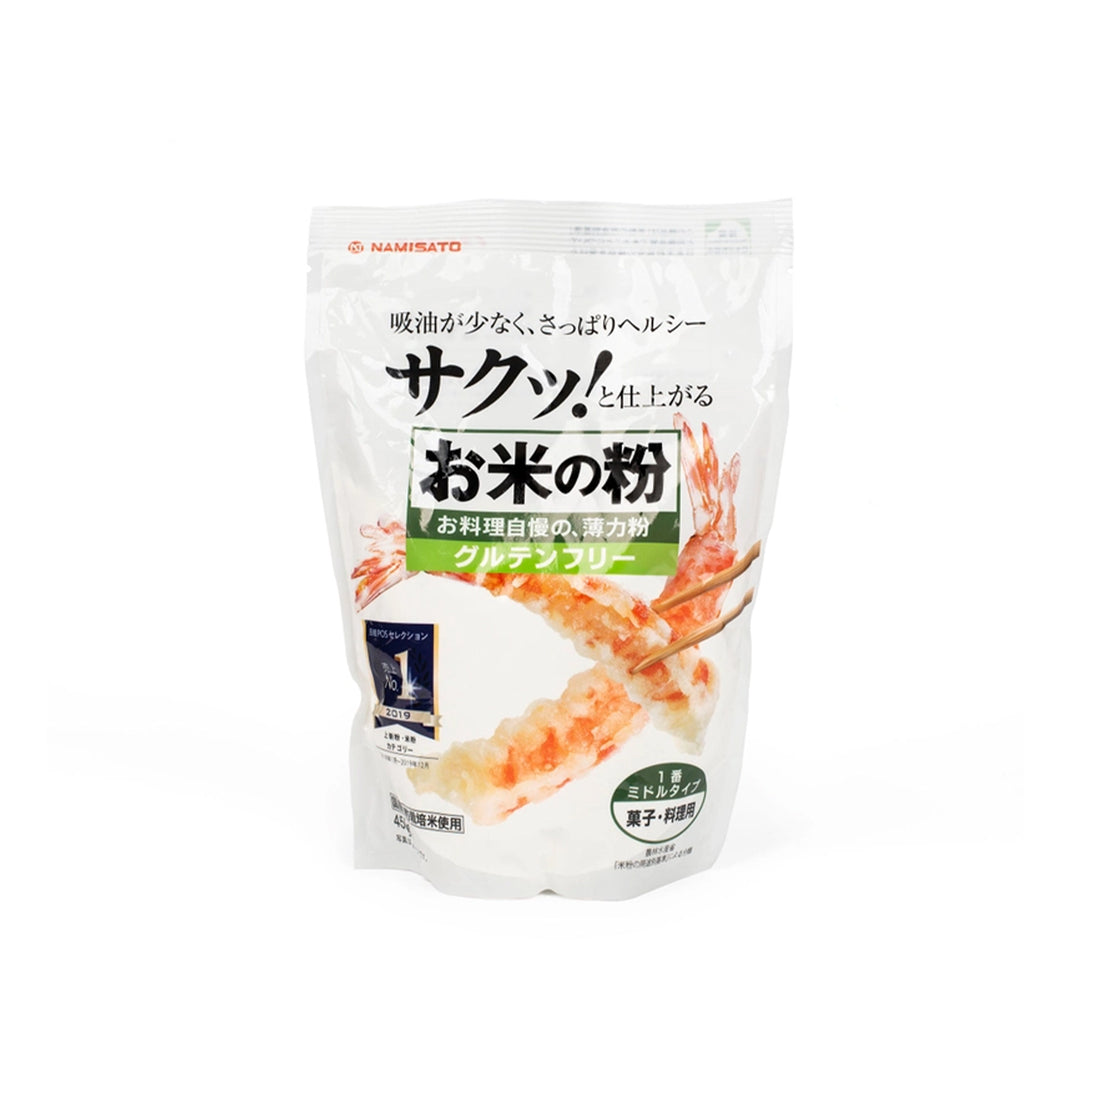 Japanese All Purpose Rice Flour, Gluten-Free, 16 oz